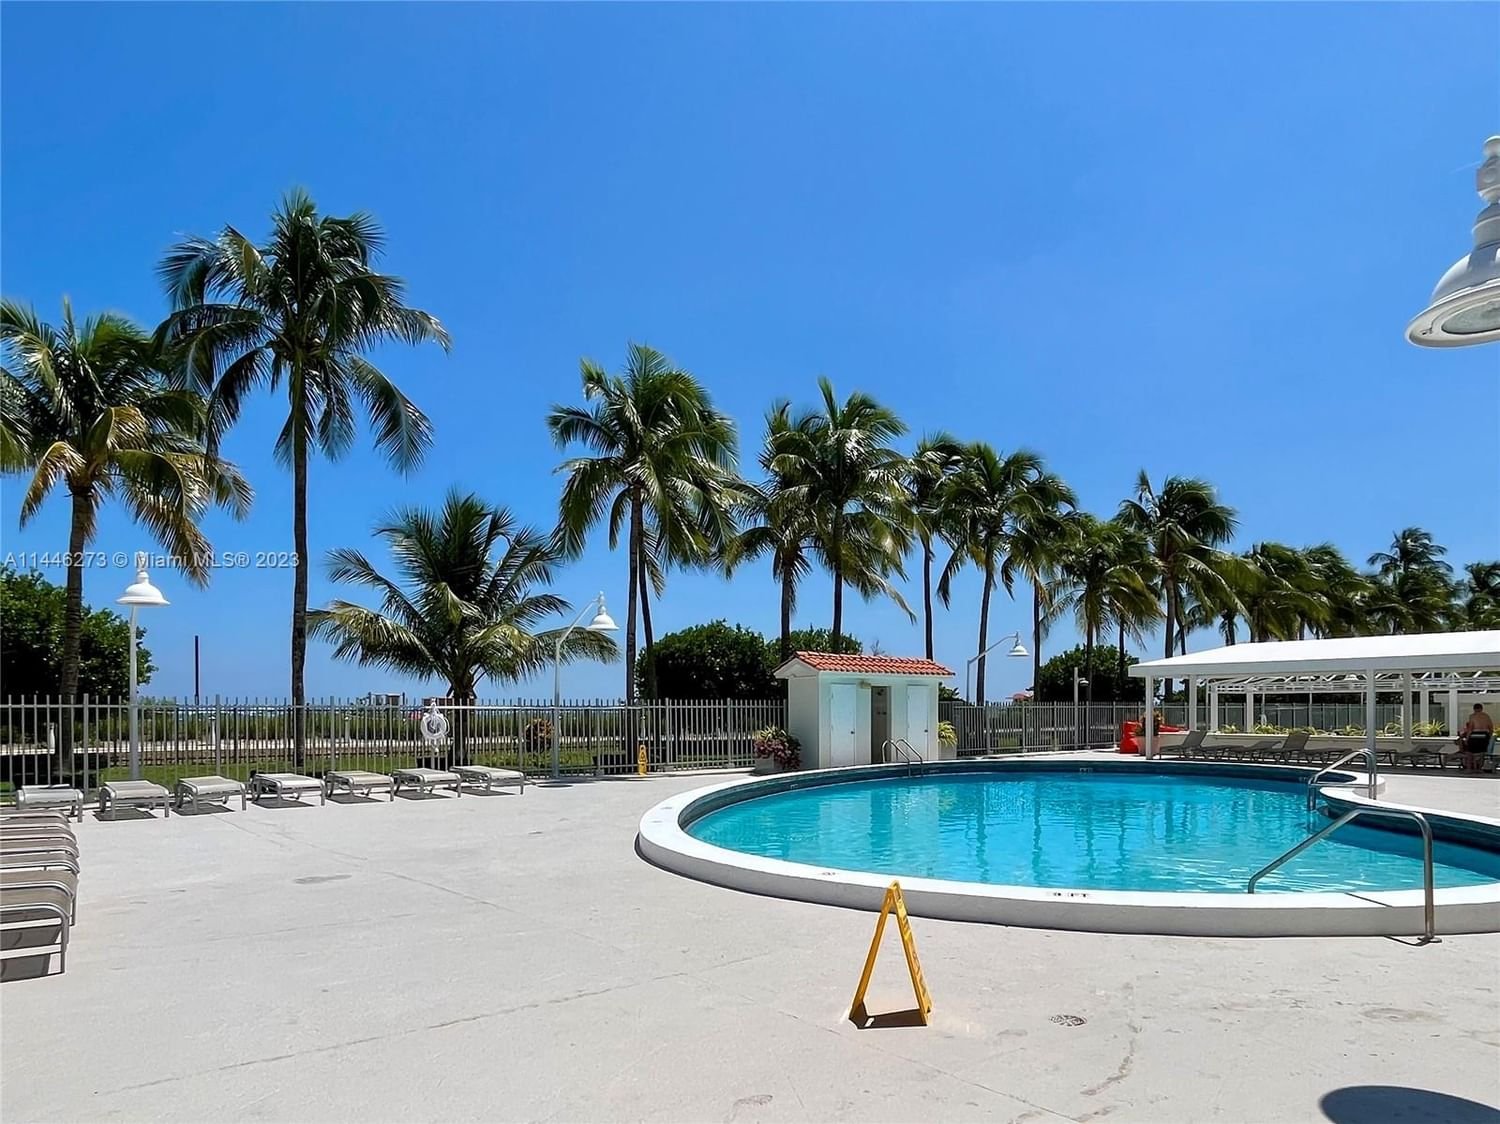 Real estate property located at 2899 Collins Ave #622, Miami-Dade County, Miami Beach, FL